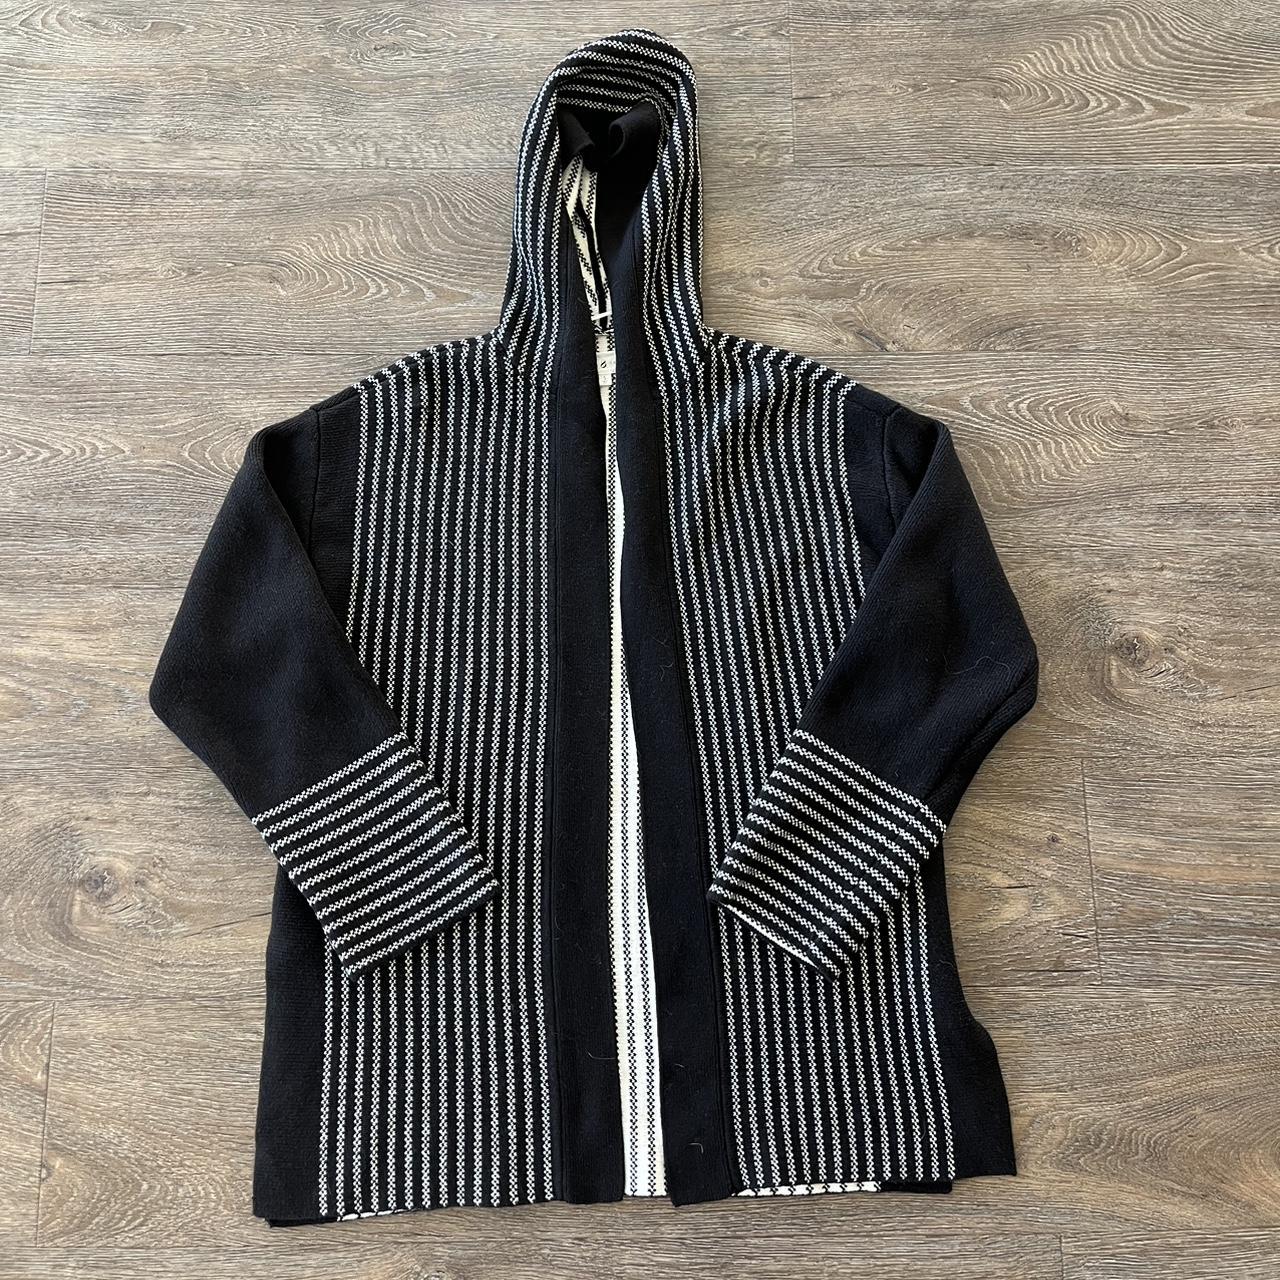 Lou & Grey Black & White Cardigan Sweater S... - Depop